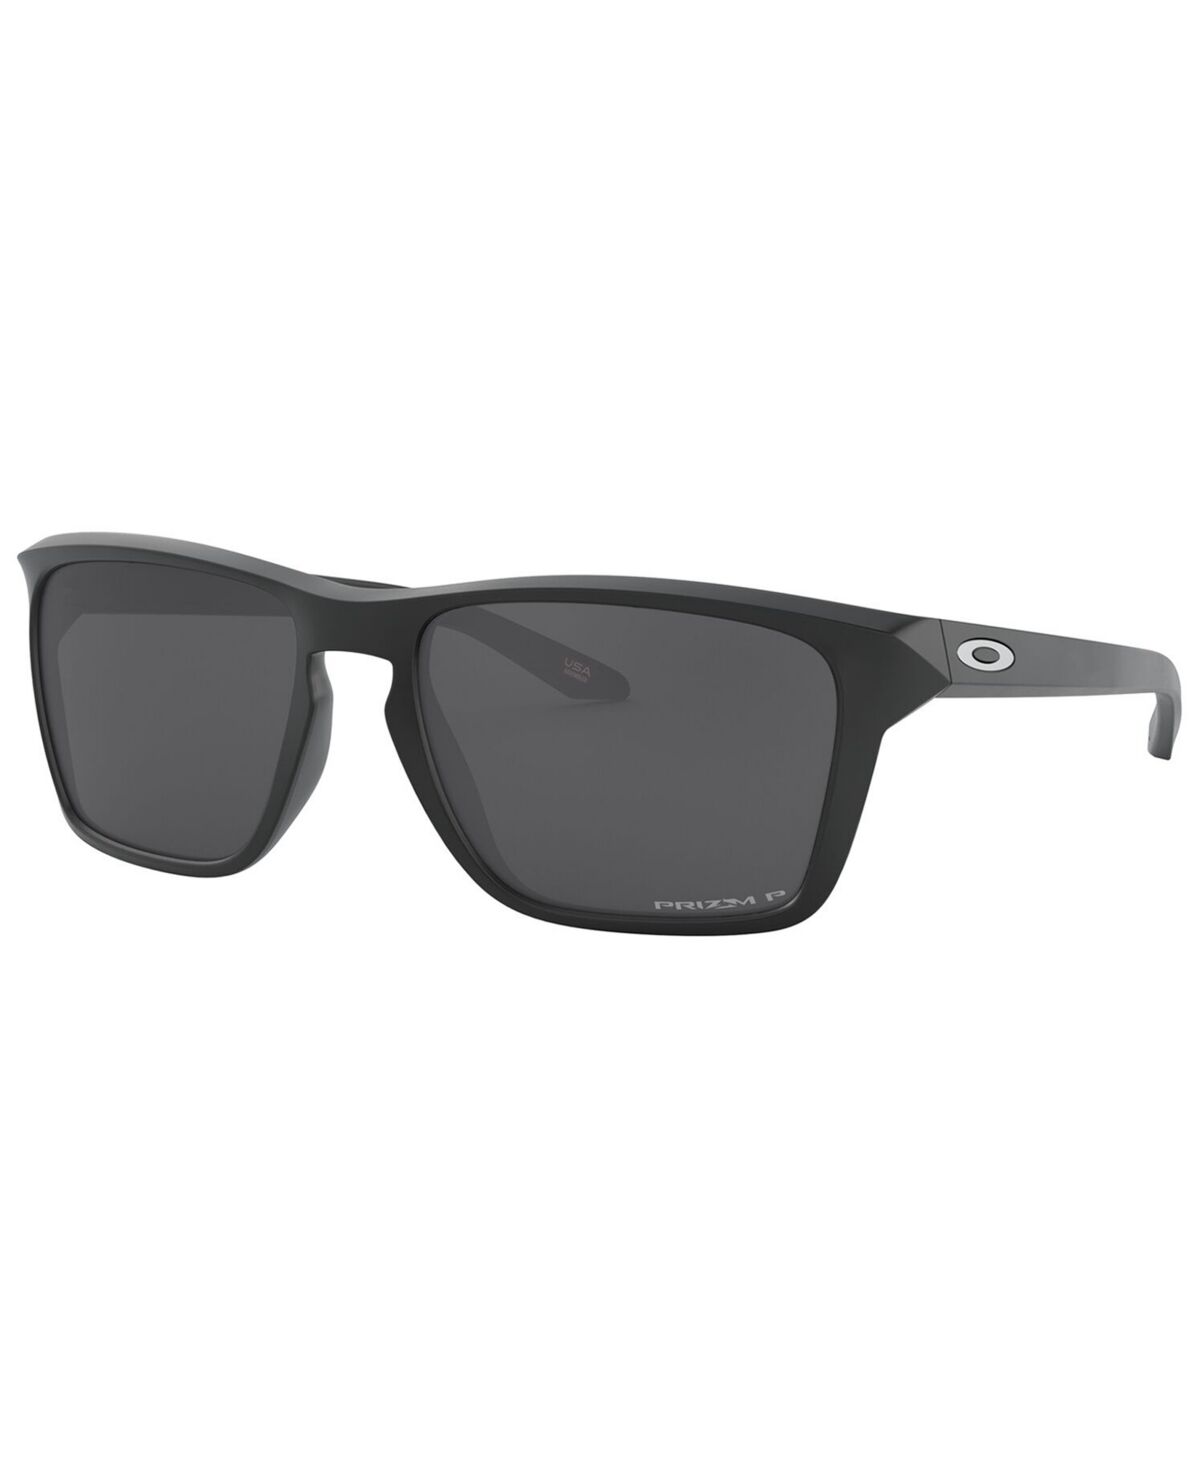 Oakley Polarized Sunglasses, OO9448 57 Sylas - MATTE BLACK/PRIZM BLACK POLARIZED